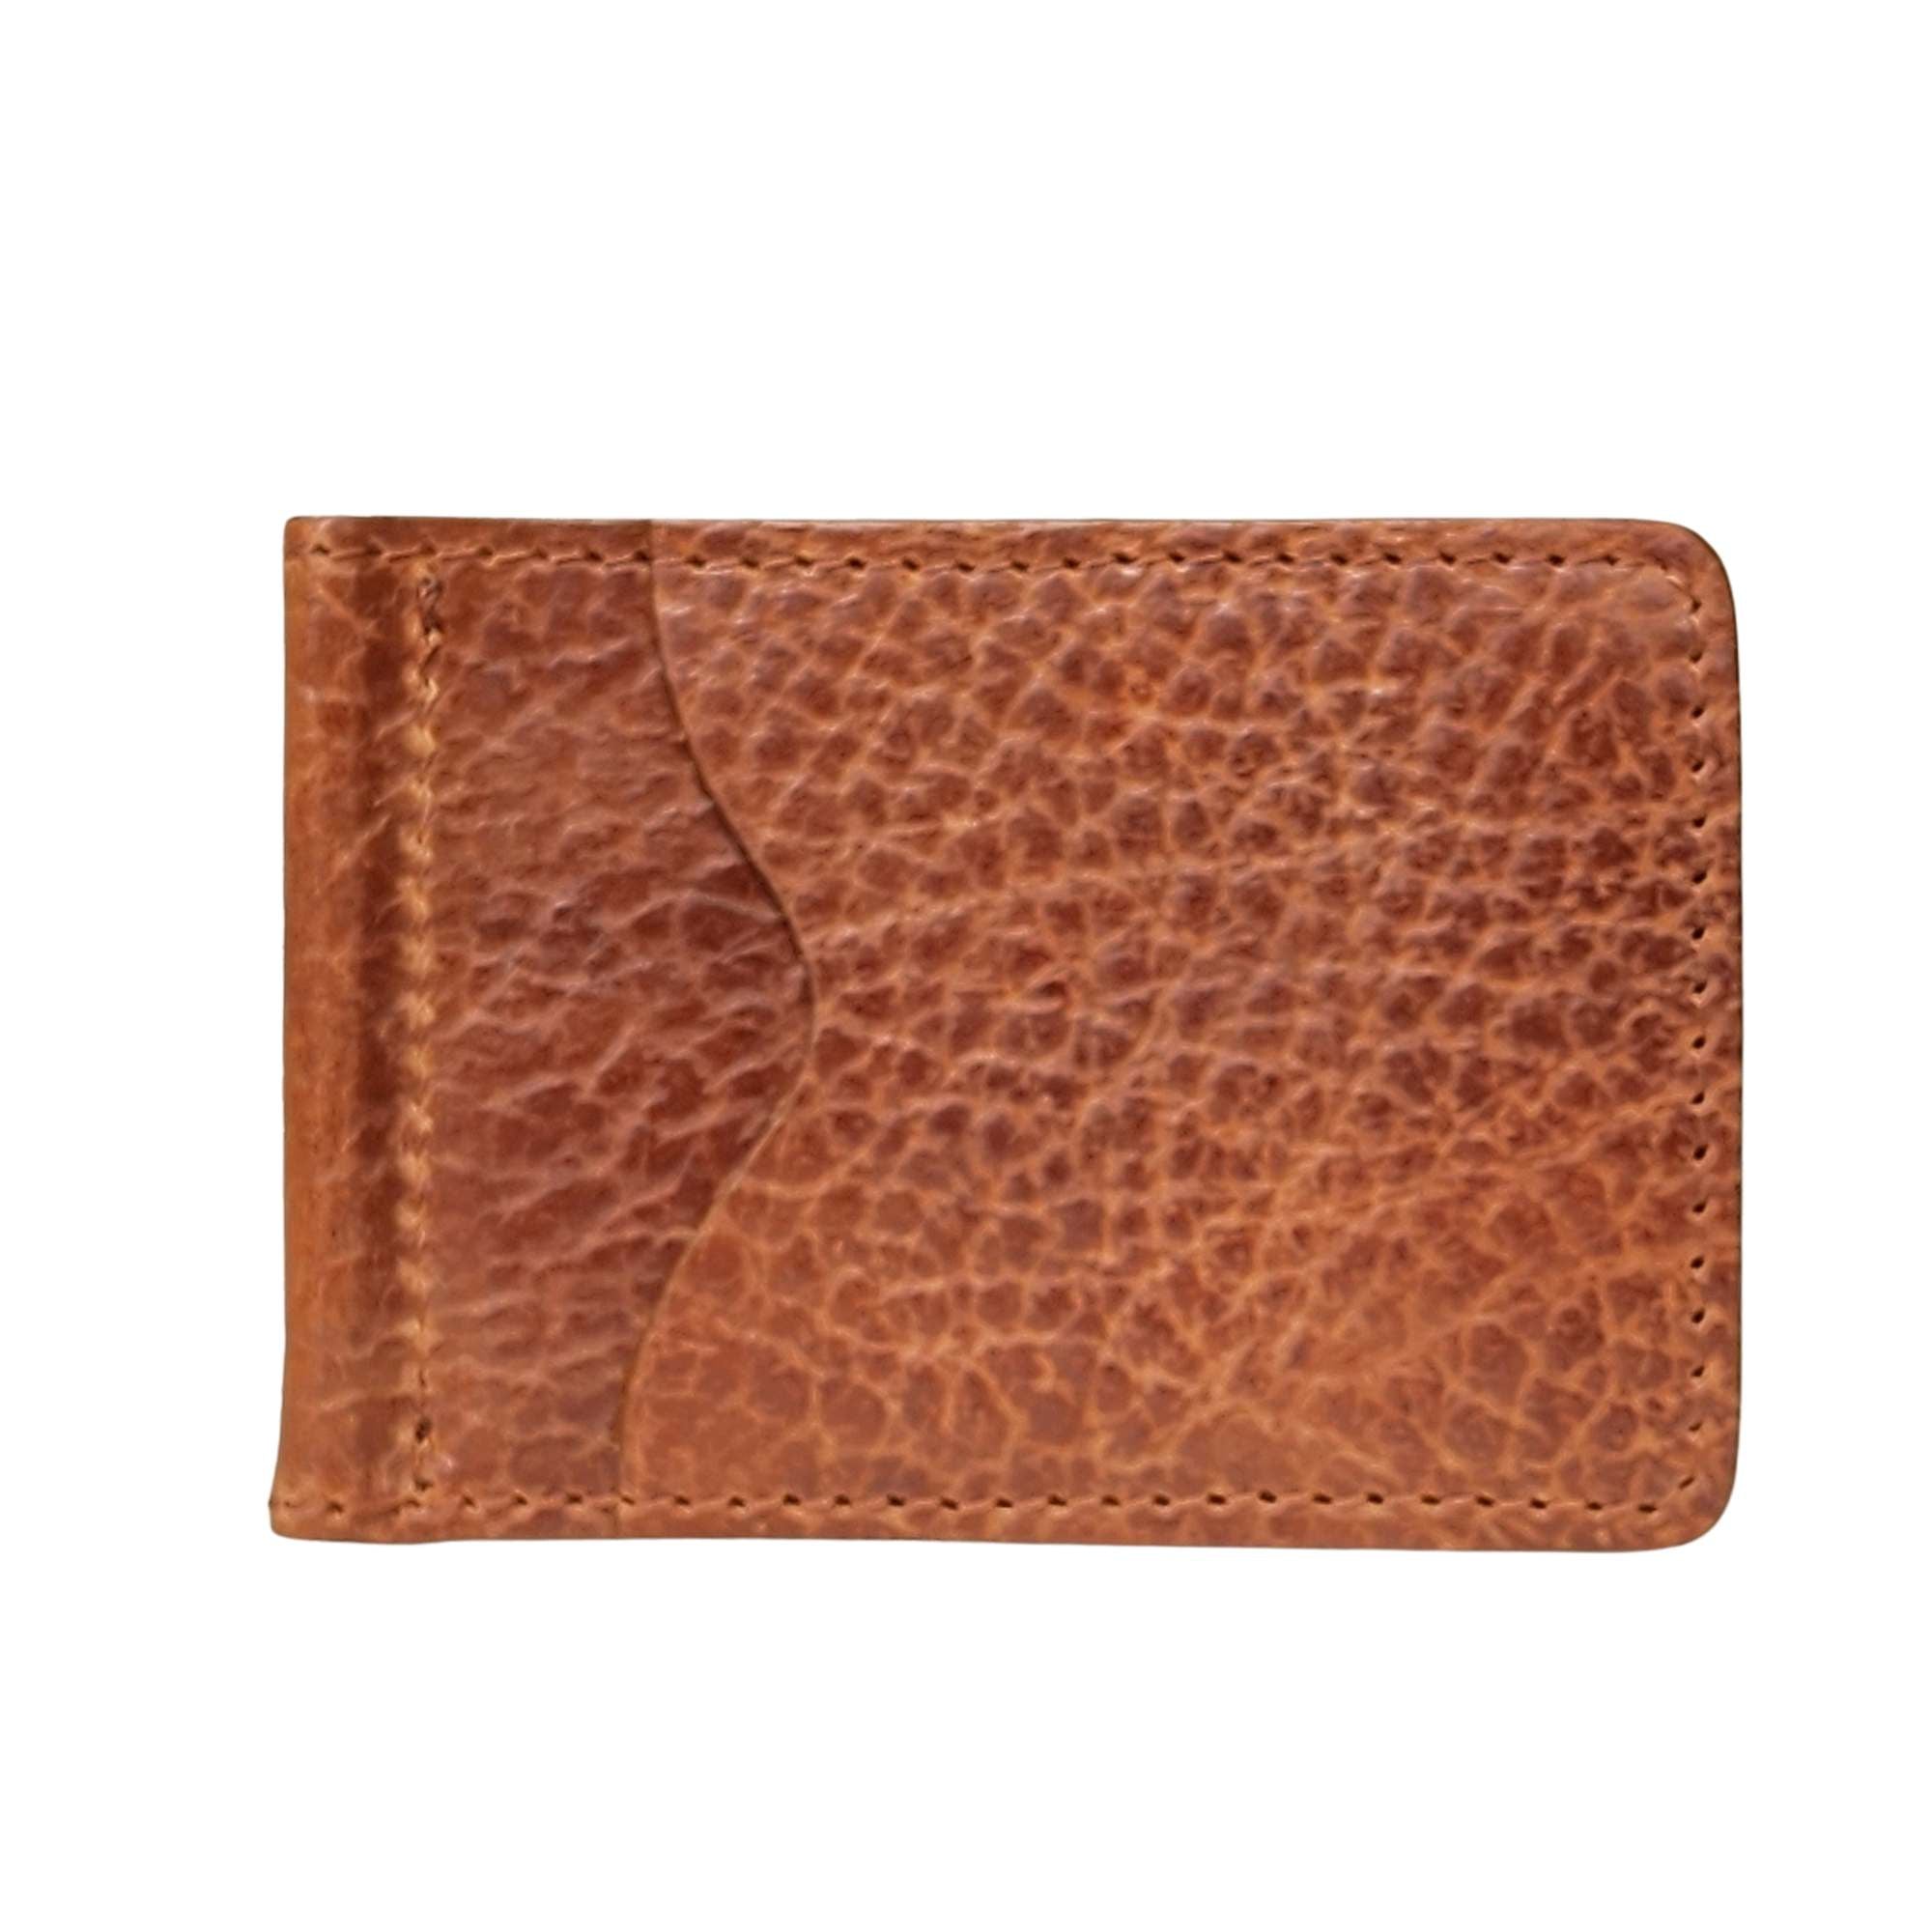 The Pinnacle Wallet - Cognac Slim Money Clip Pebble Grain Leather Wall